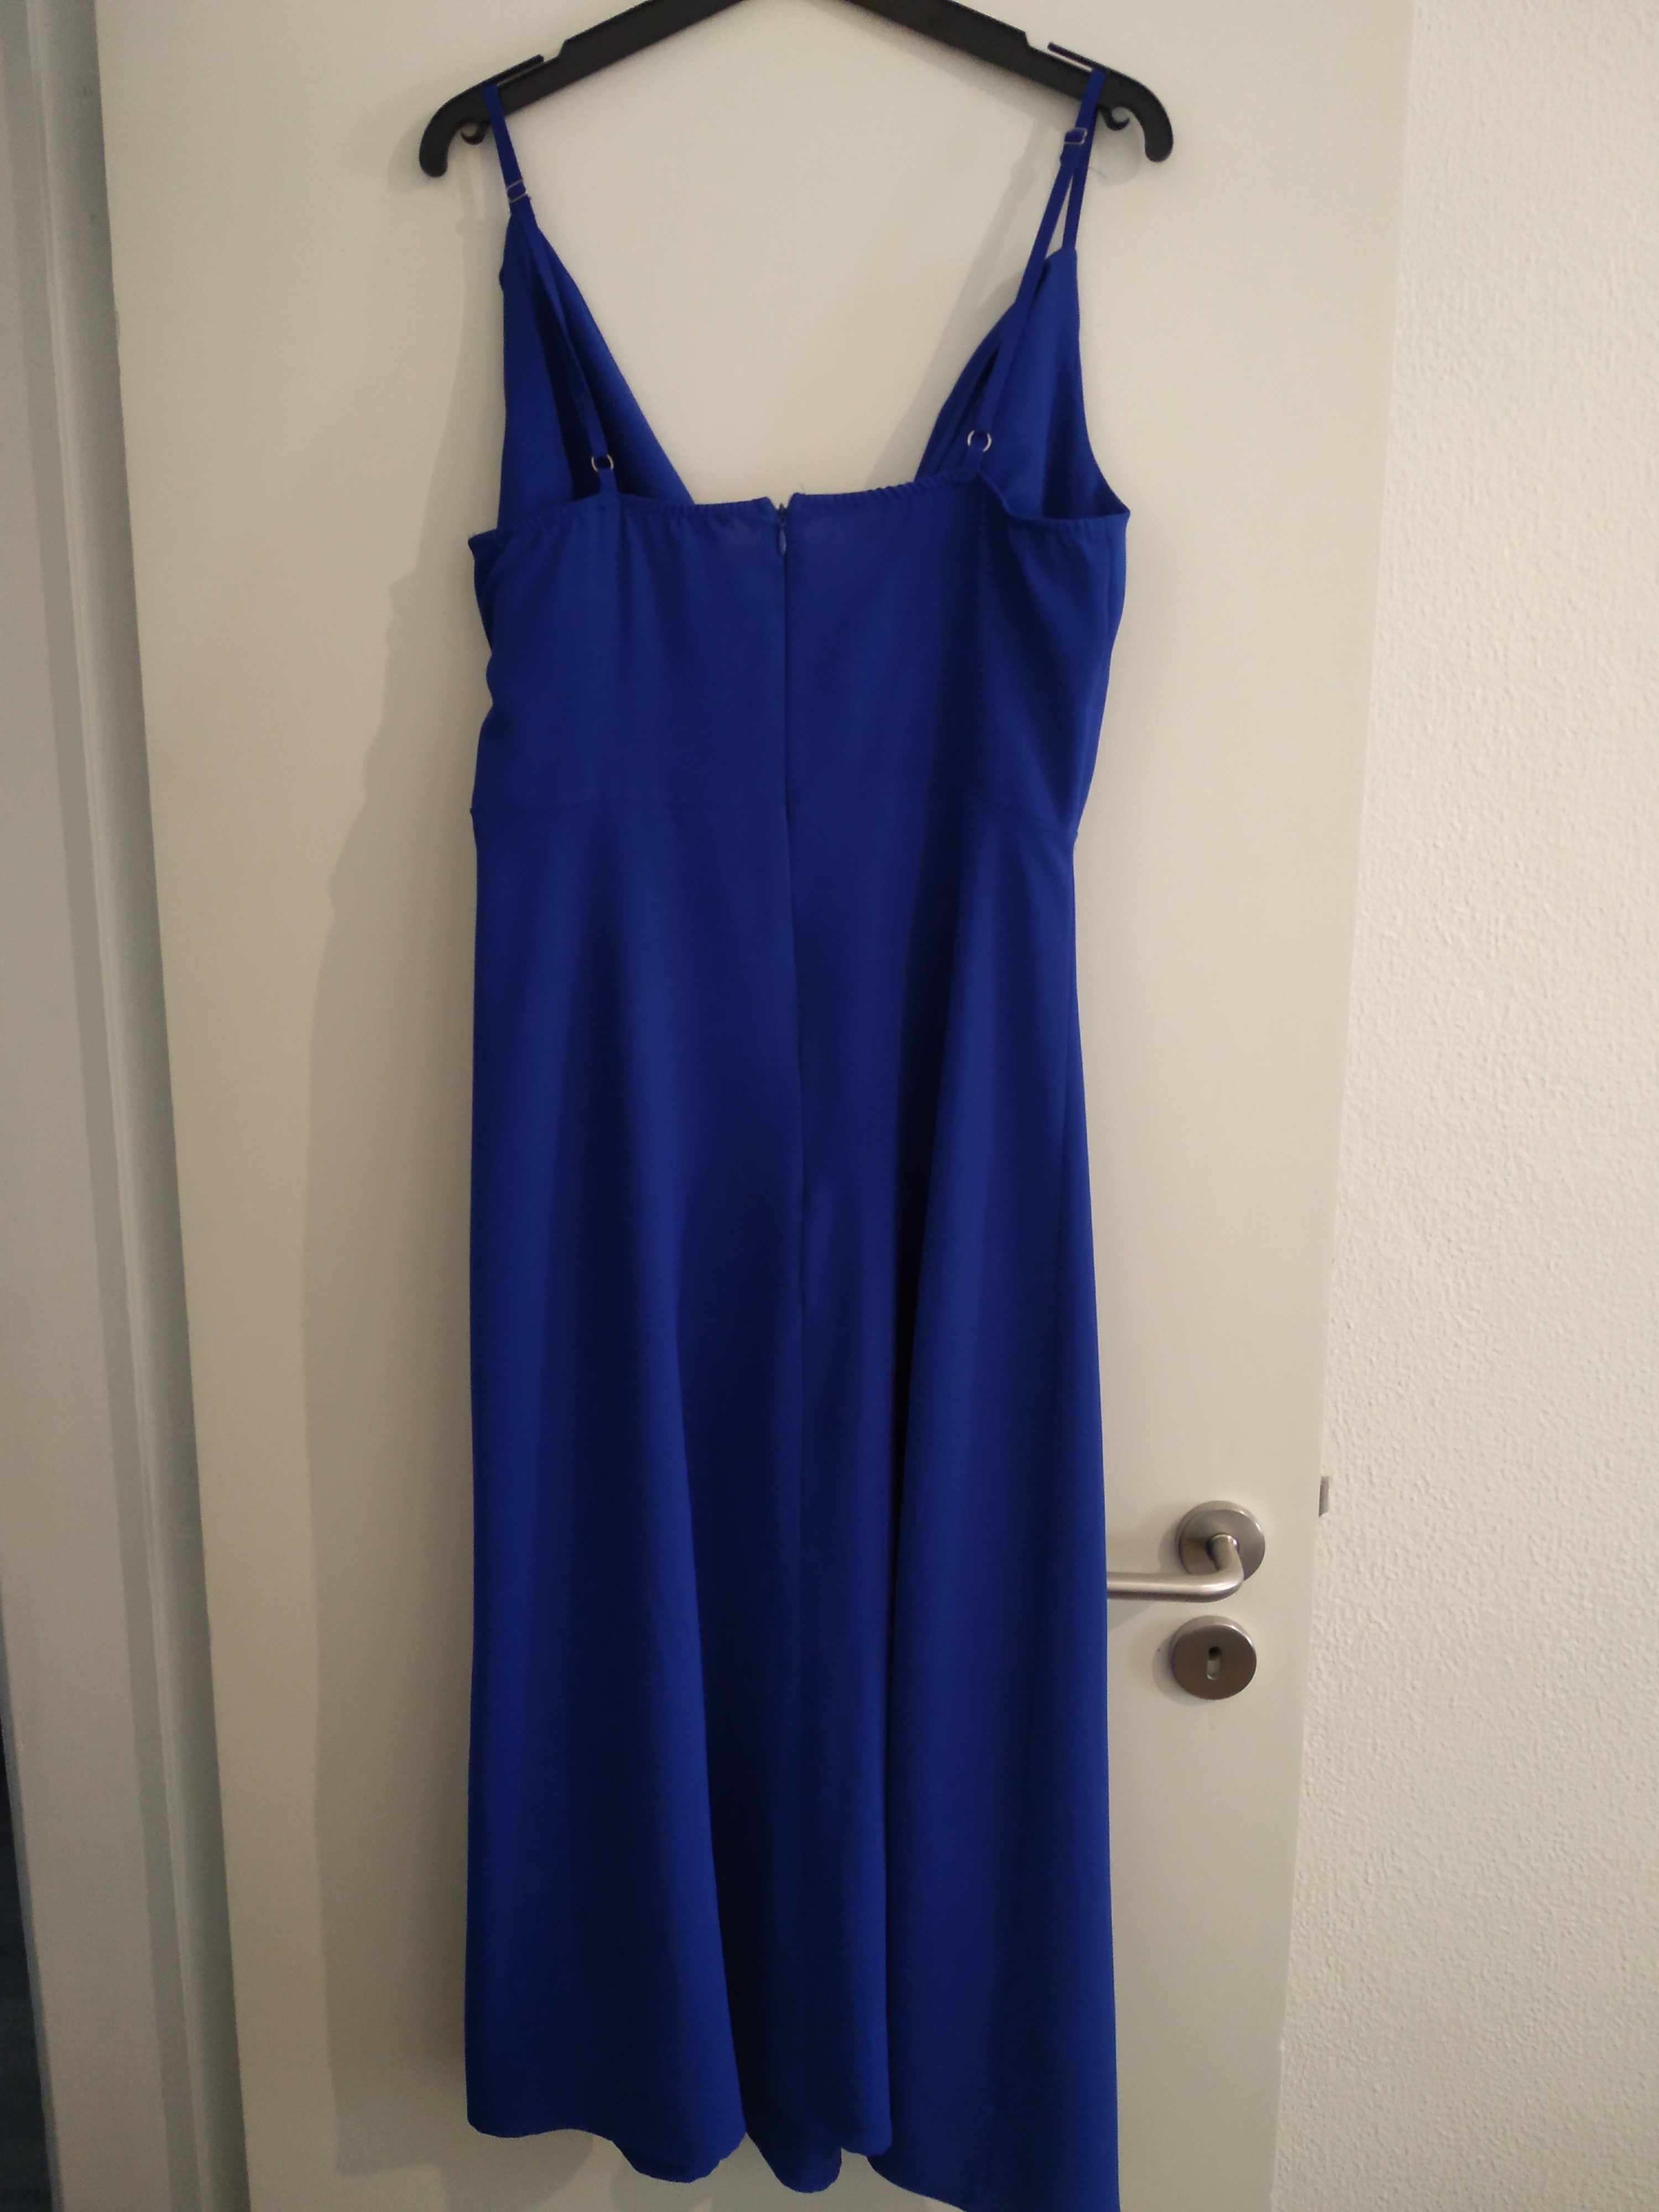 Vendo vestido azul